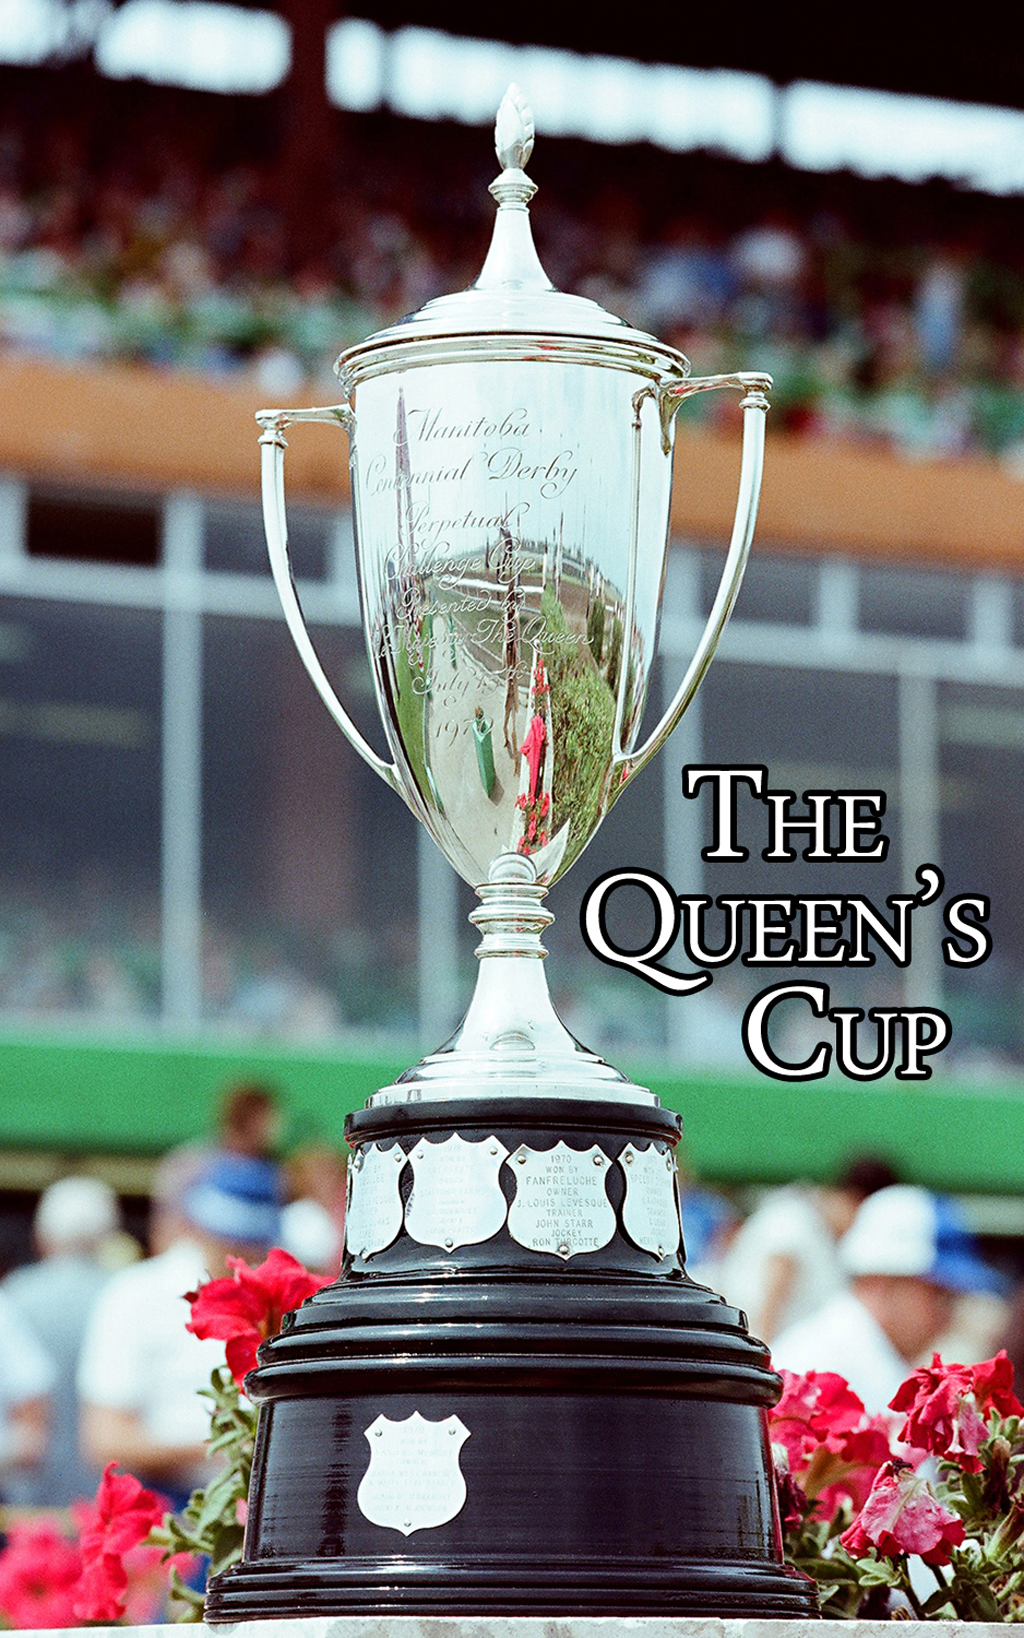 The Queen's Cup.